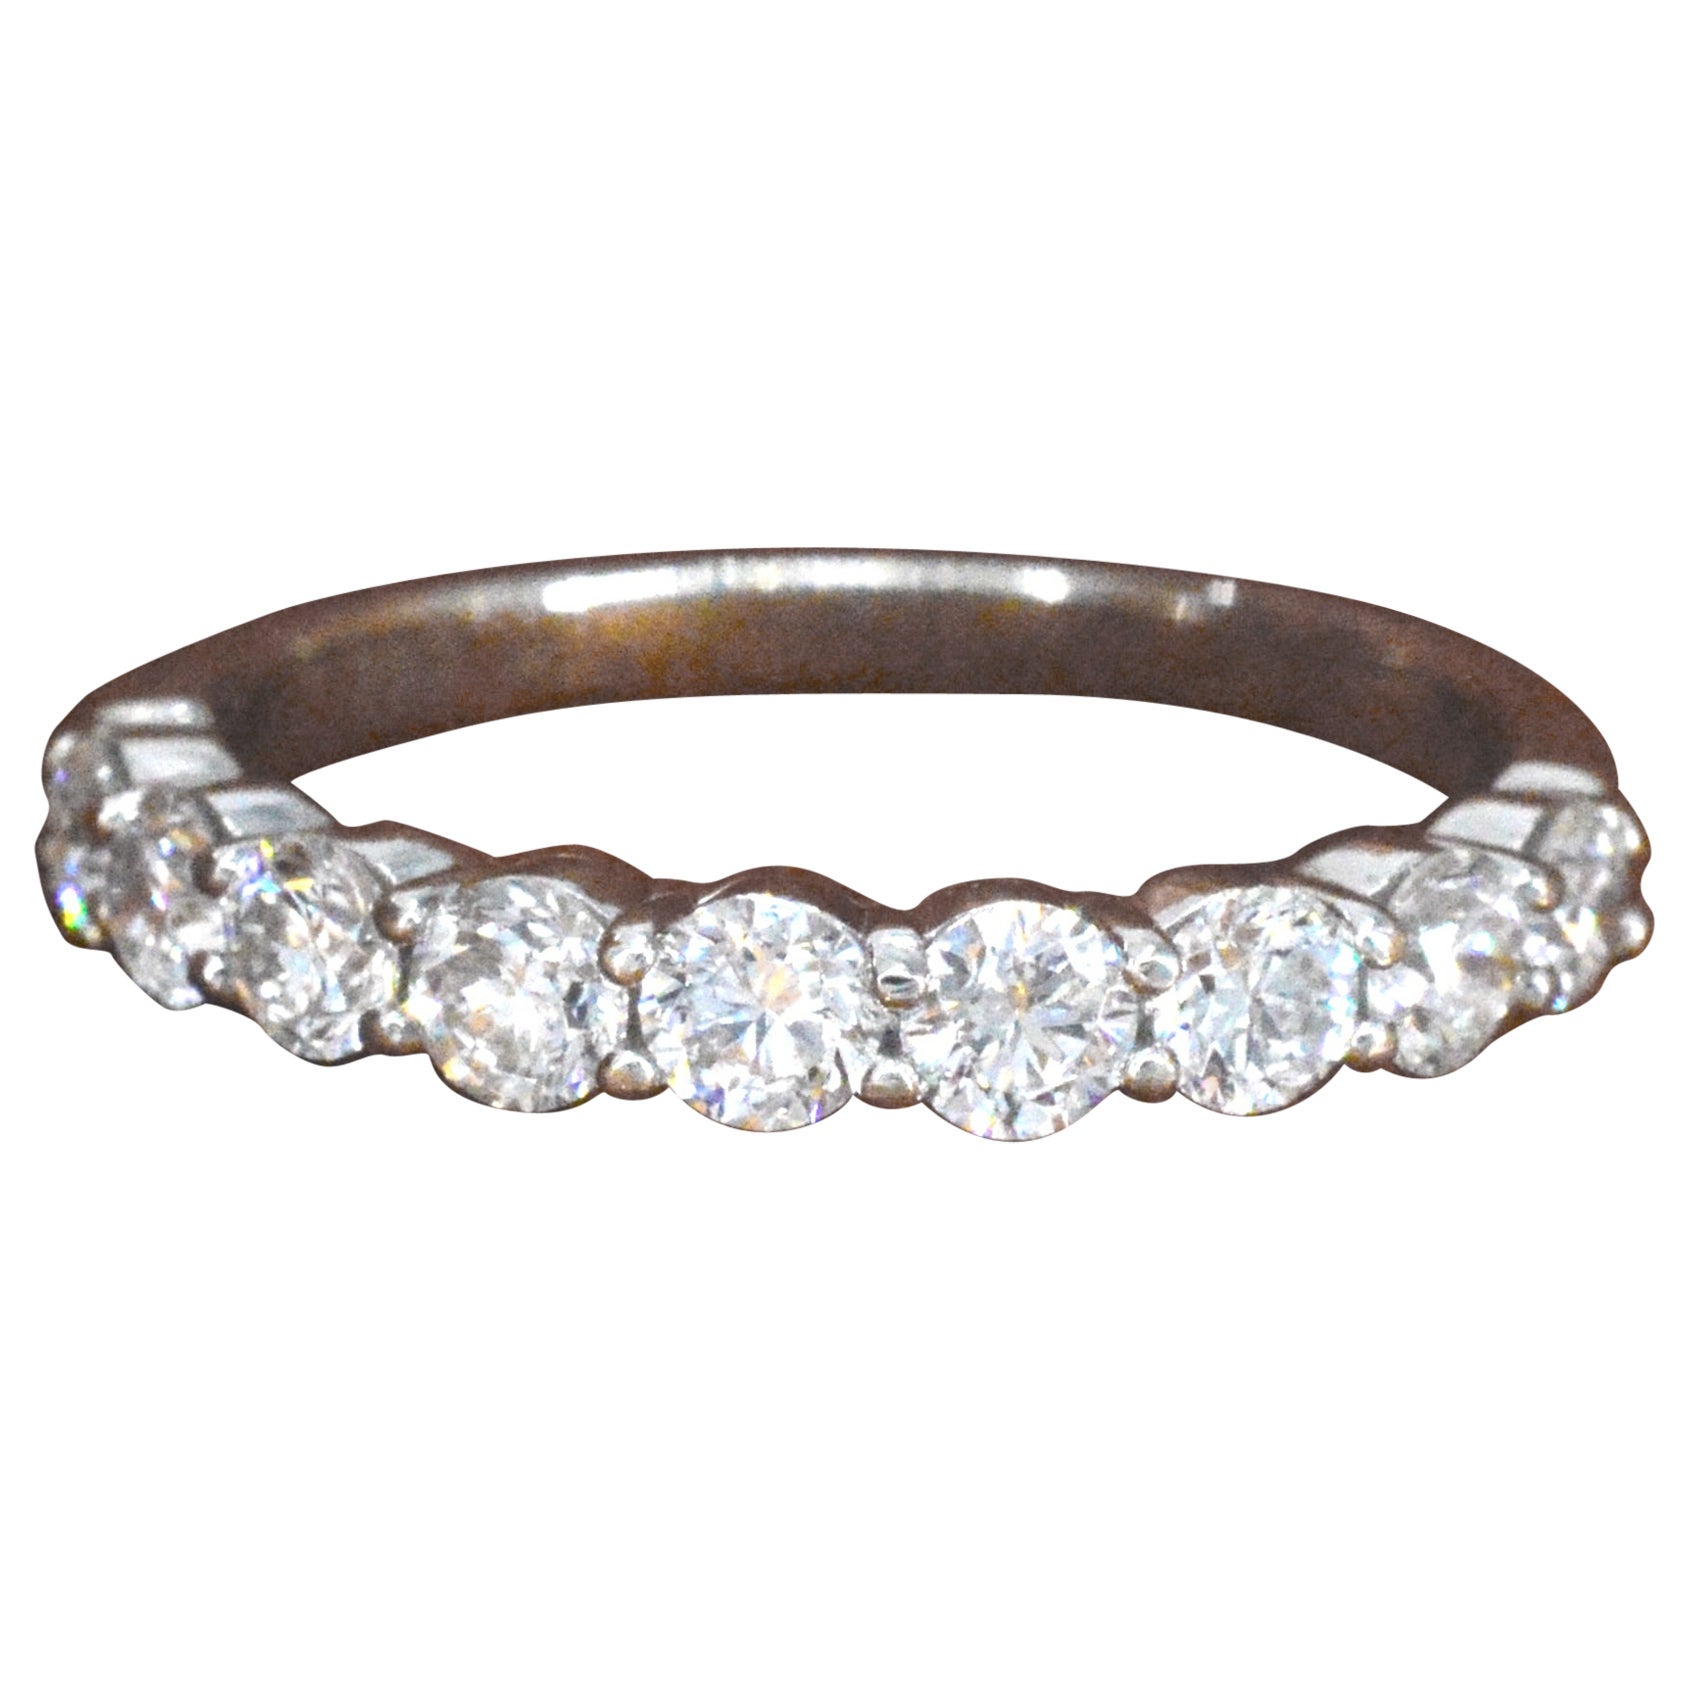 Gassan - White golden alliance ring with 0.75 carat brilliant cut diamonds